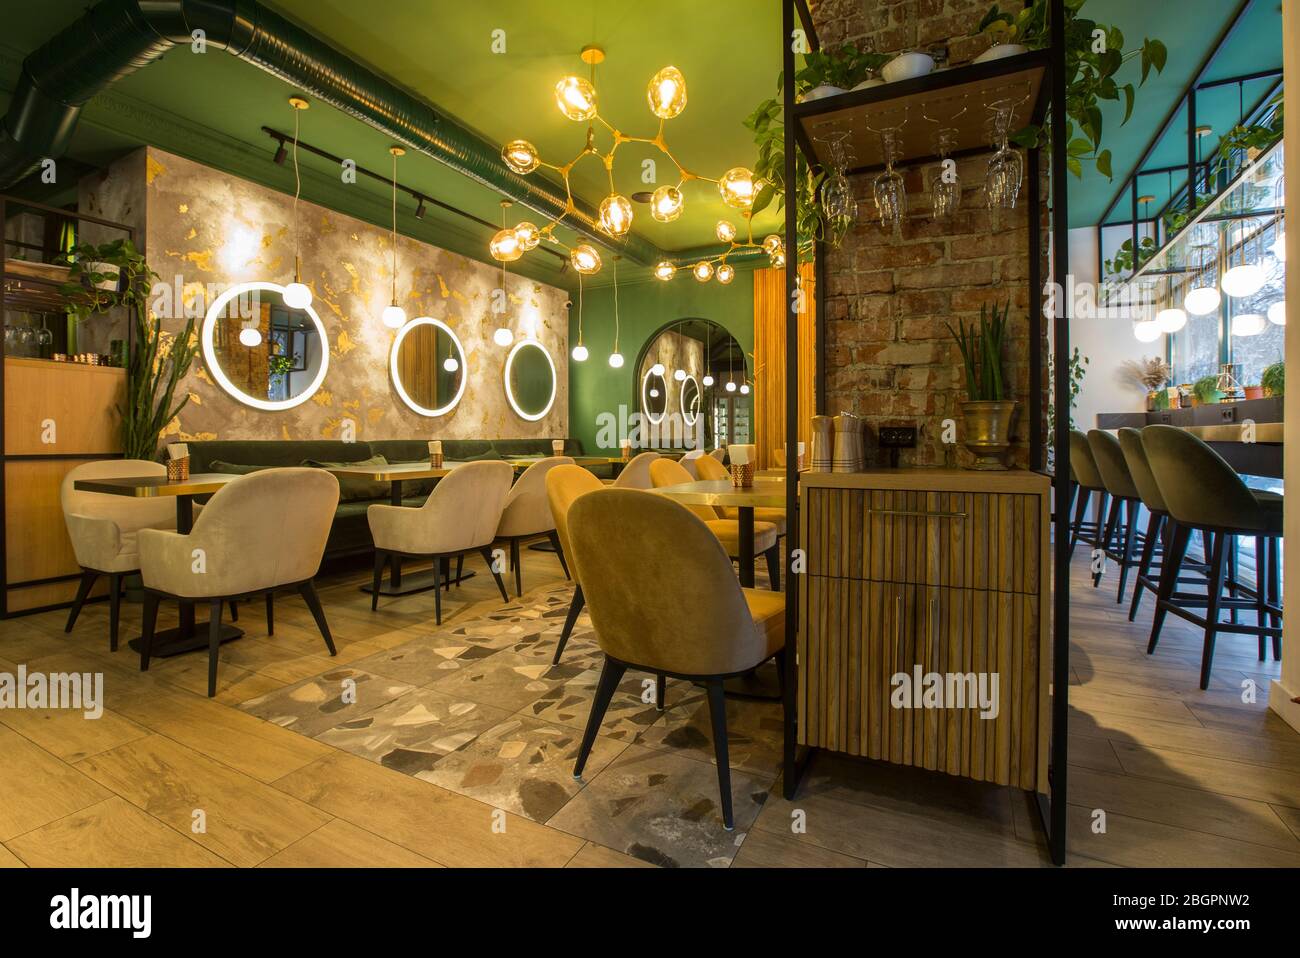 Urban cafe interior with cozy atmosphere, avocado color walls Stock Photo -  Alamy